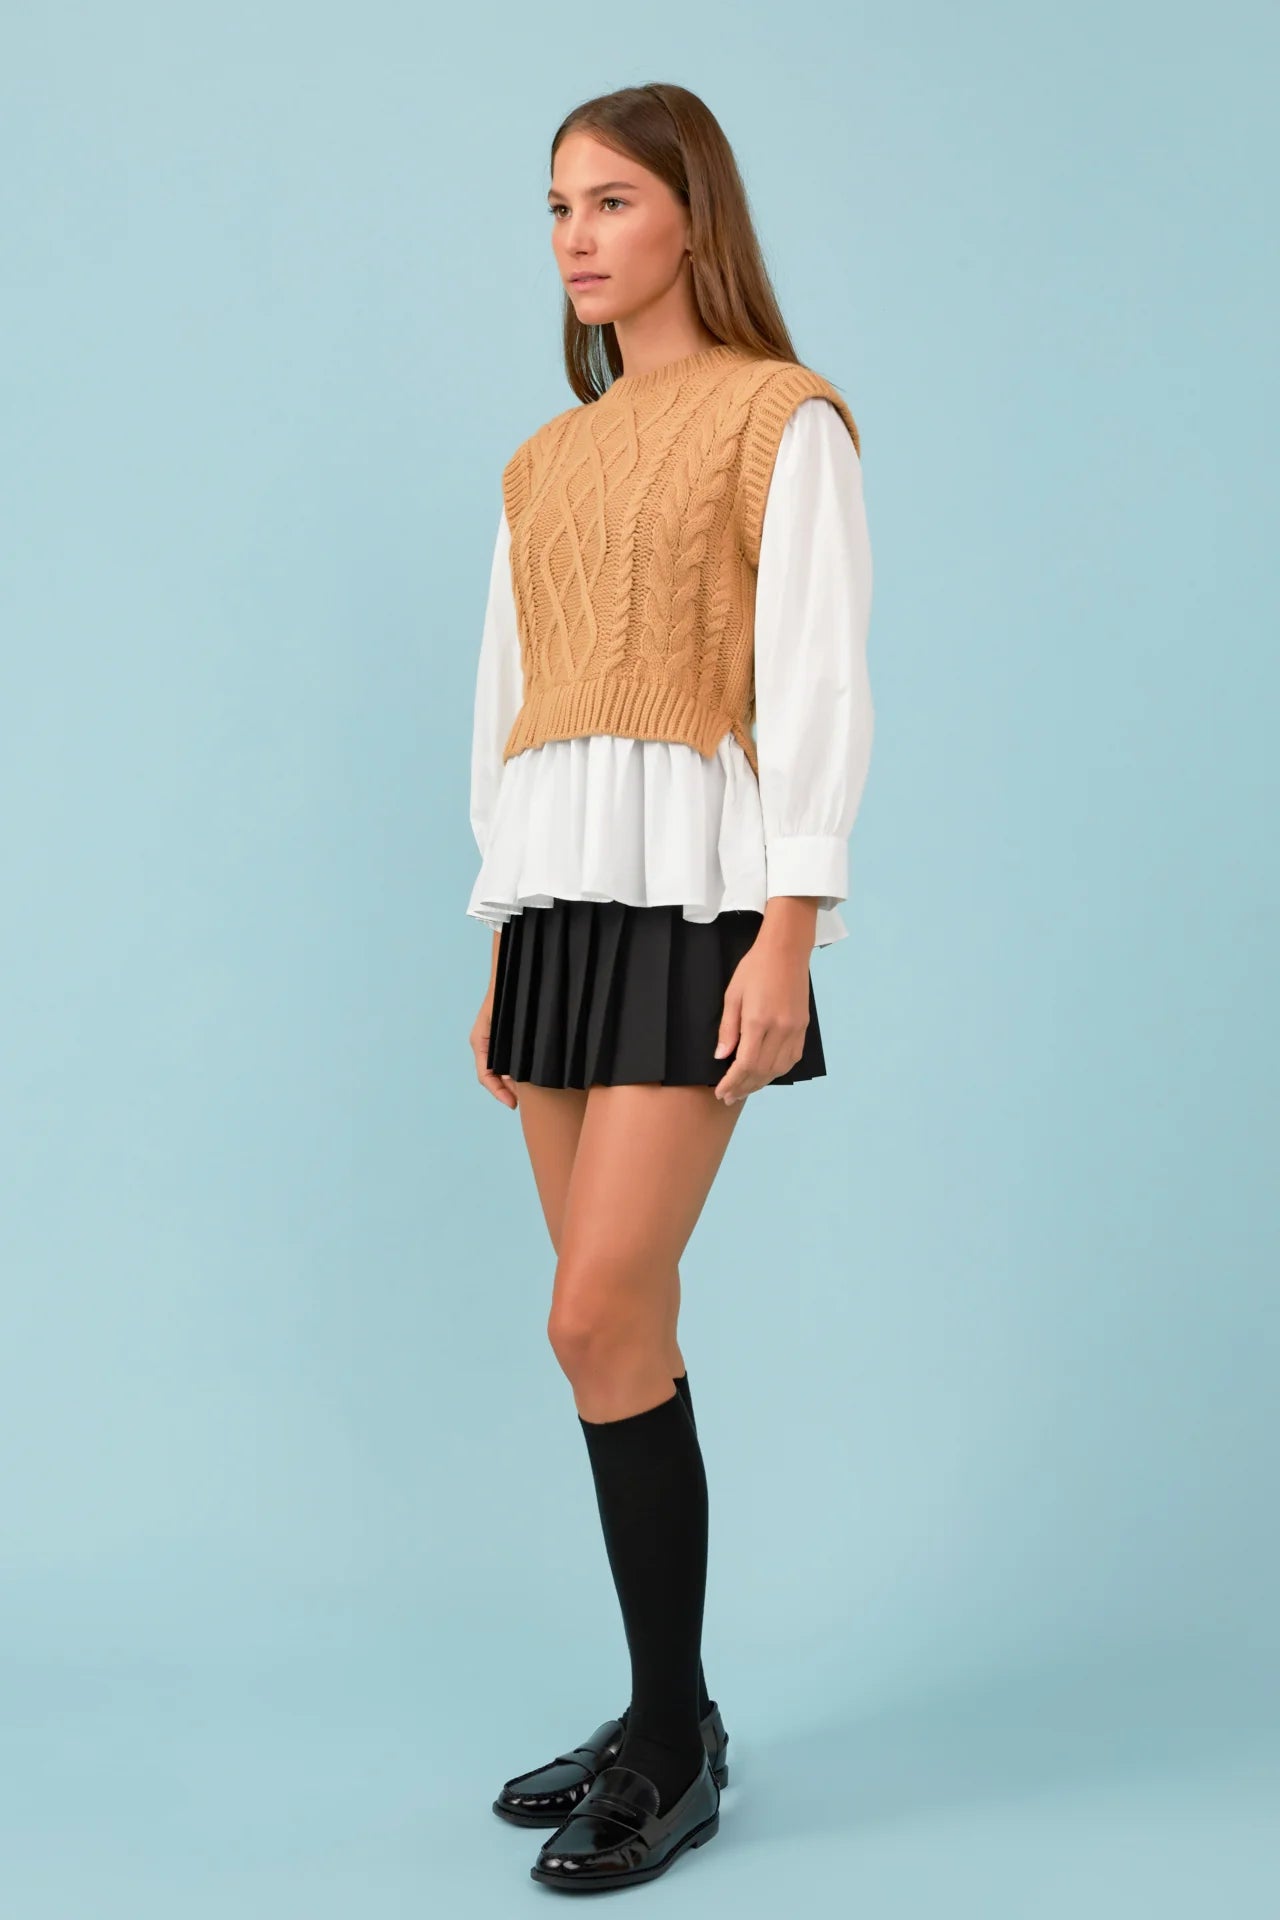 Tan Cable Knit Sweater - Lush Lemon - Women's Clothing - English Factory - 11503